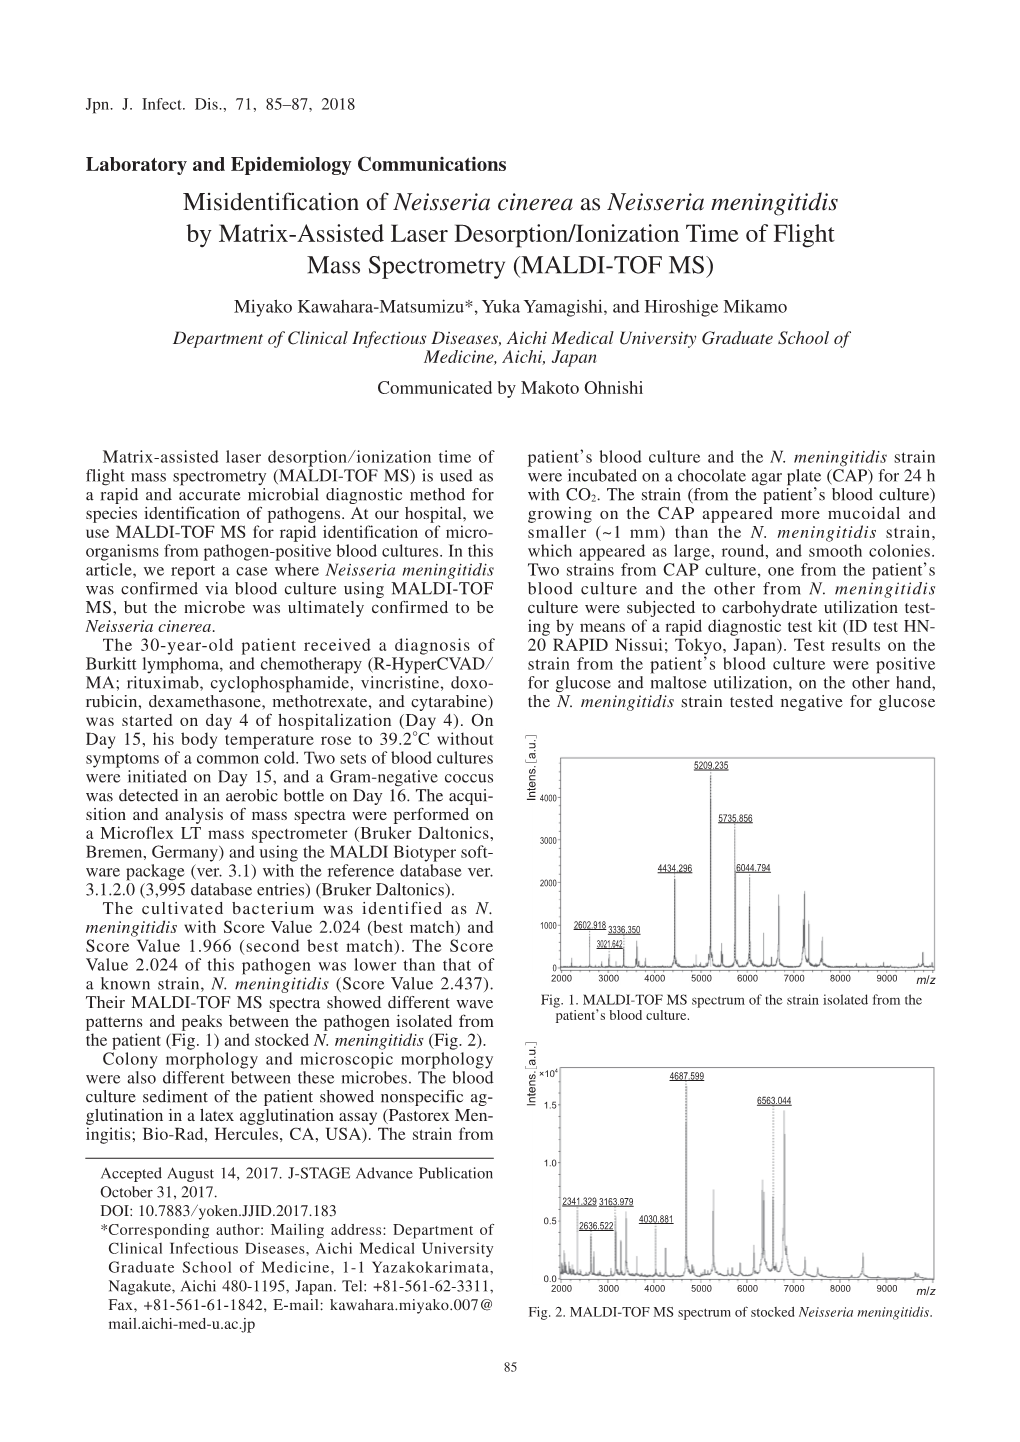 Misidentification of Neisseria Cinerea As Neisseria Meningitidis by Matrix-Assisted Laser Desorption/Ionization Time of Flight Mass Spectrometry (MALDI-TOF MS)